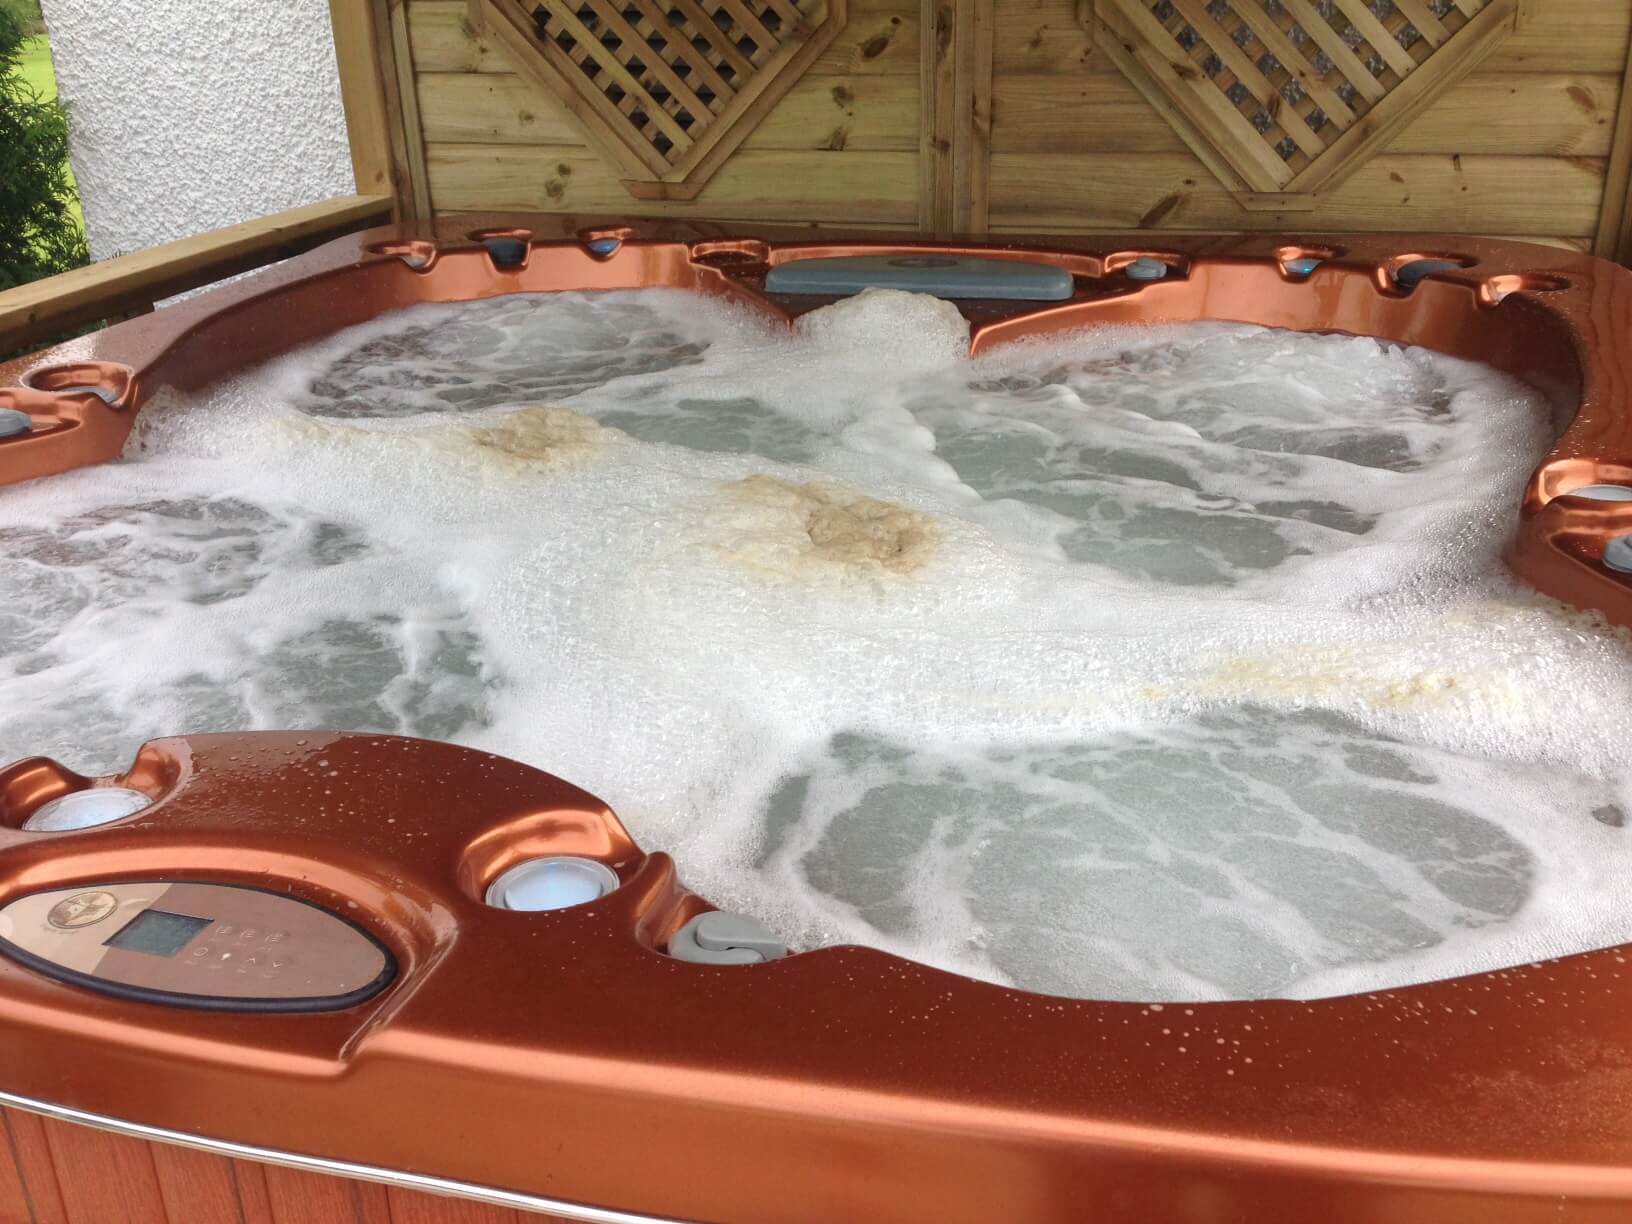 Hot tub Repairs Scotland & Hot Tub Servicing